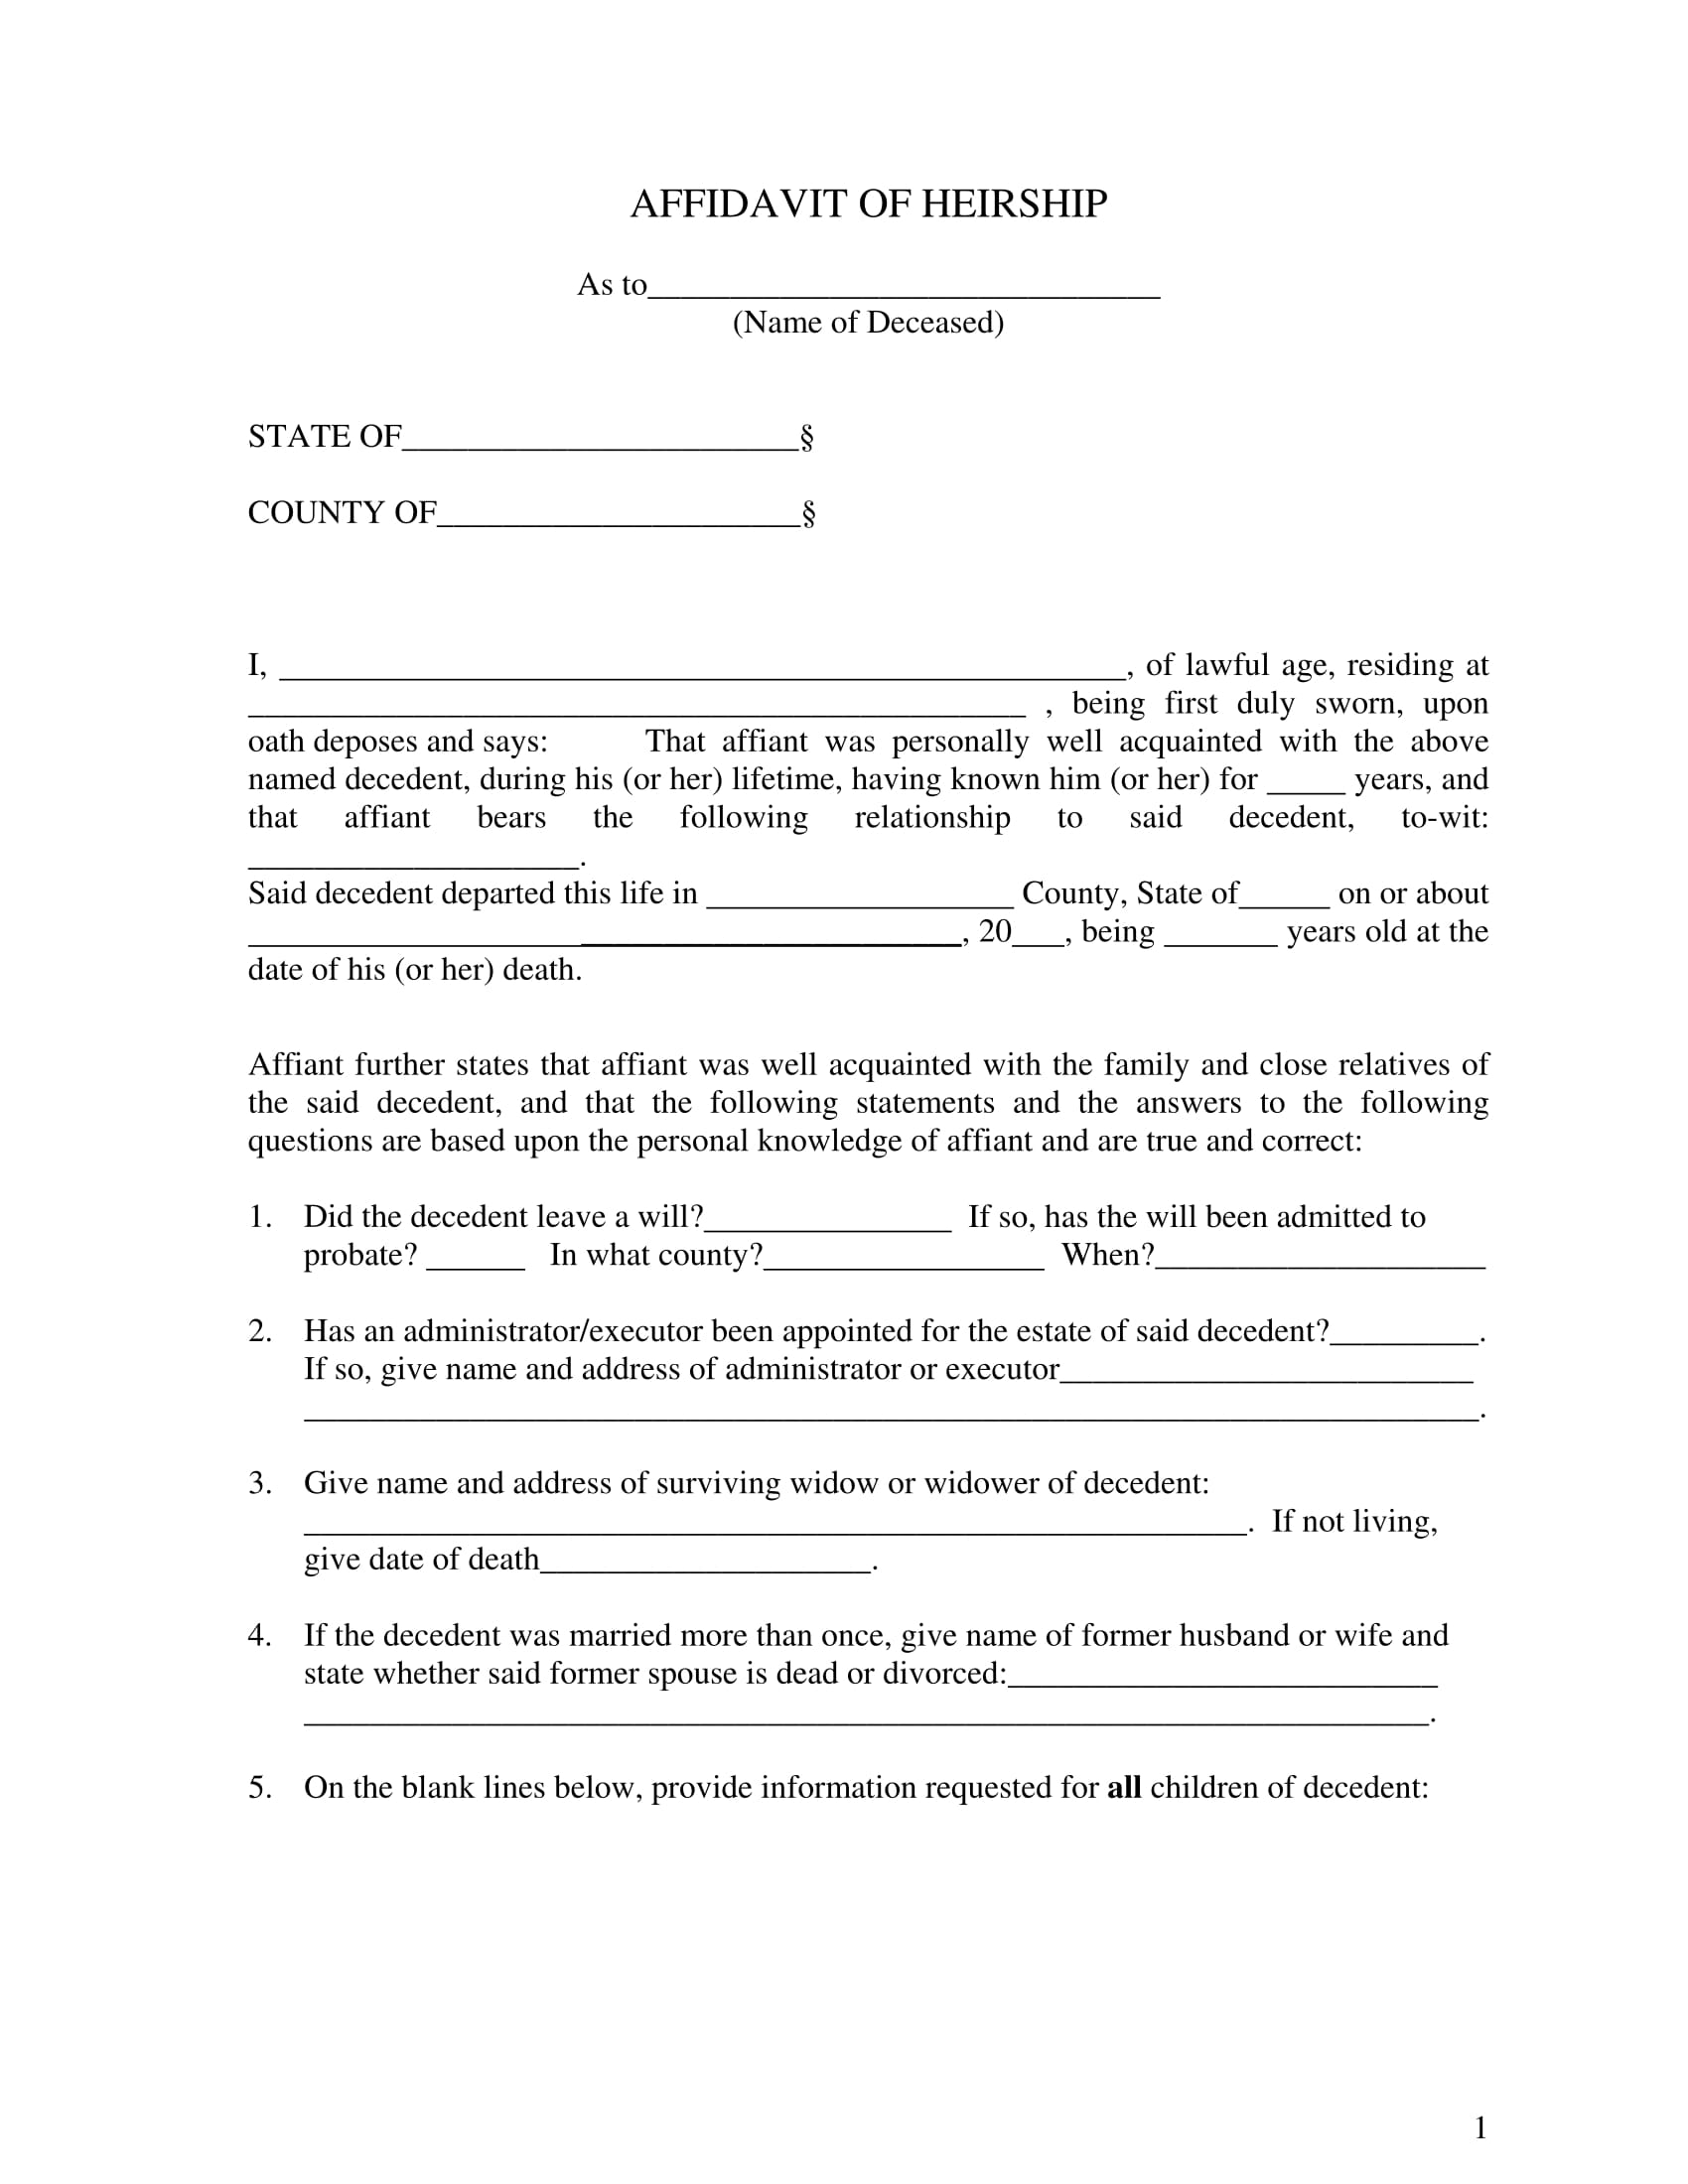 affidavit of heirship format 1